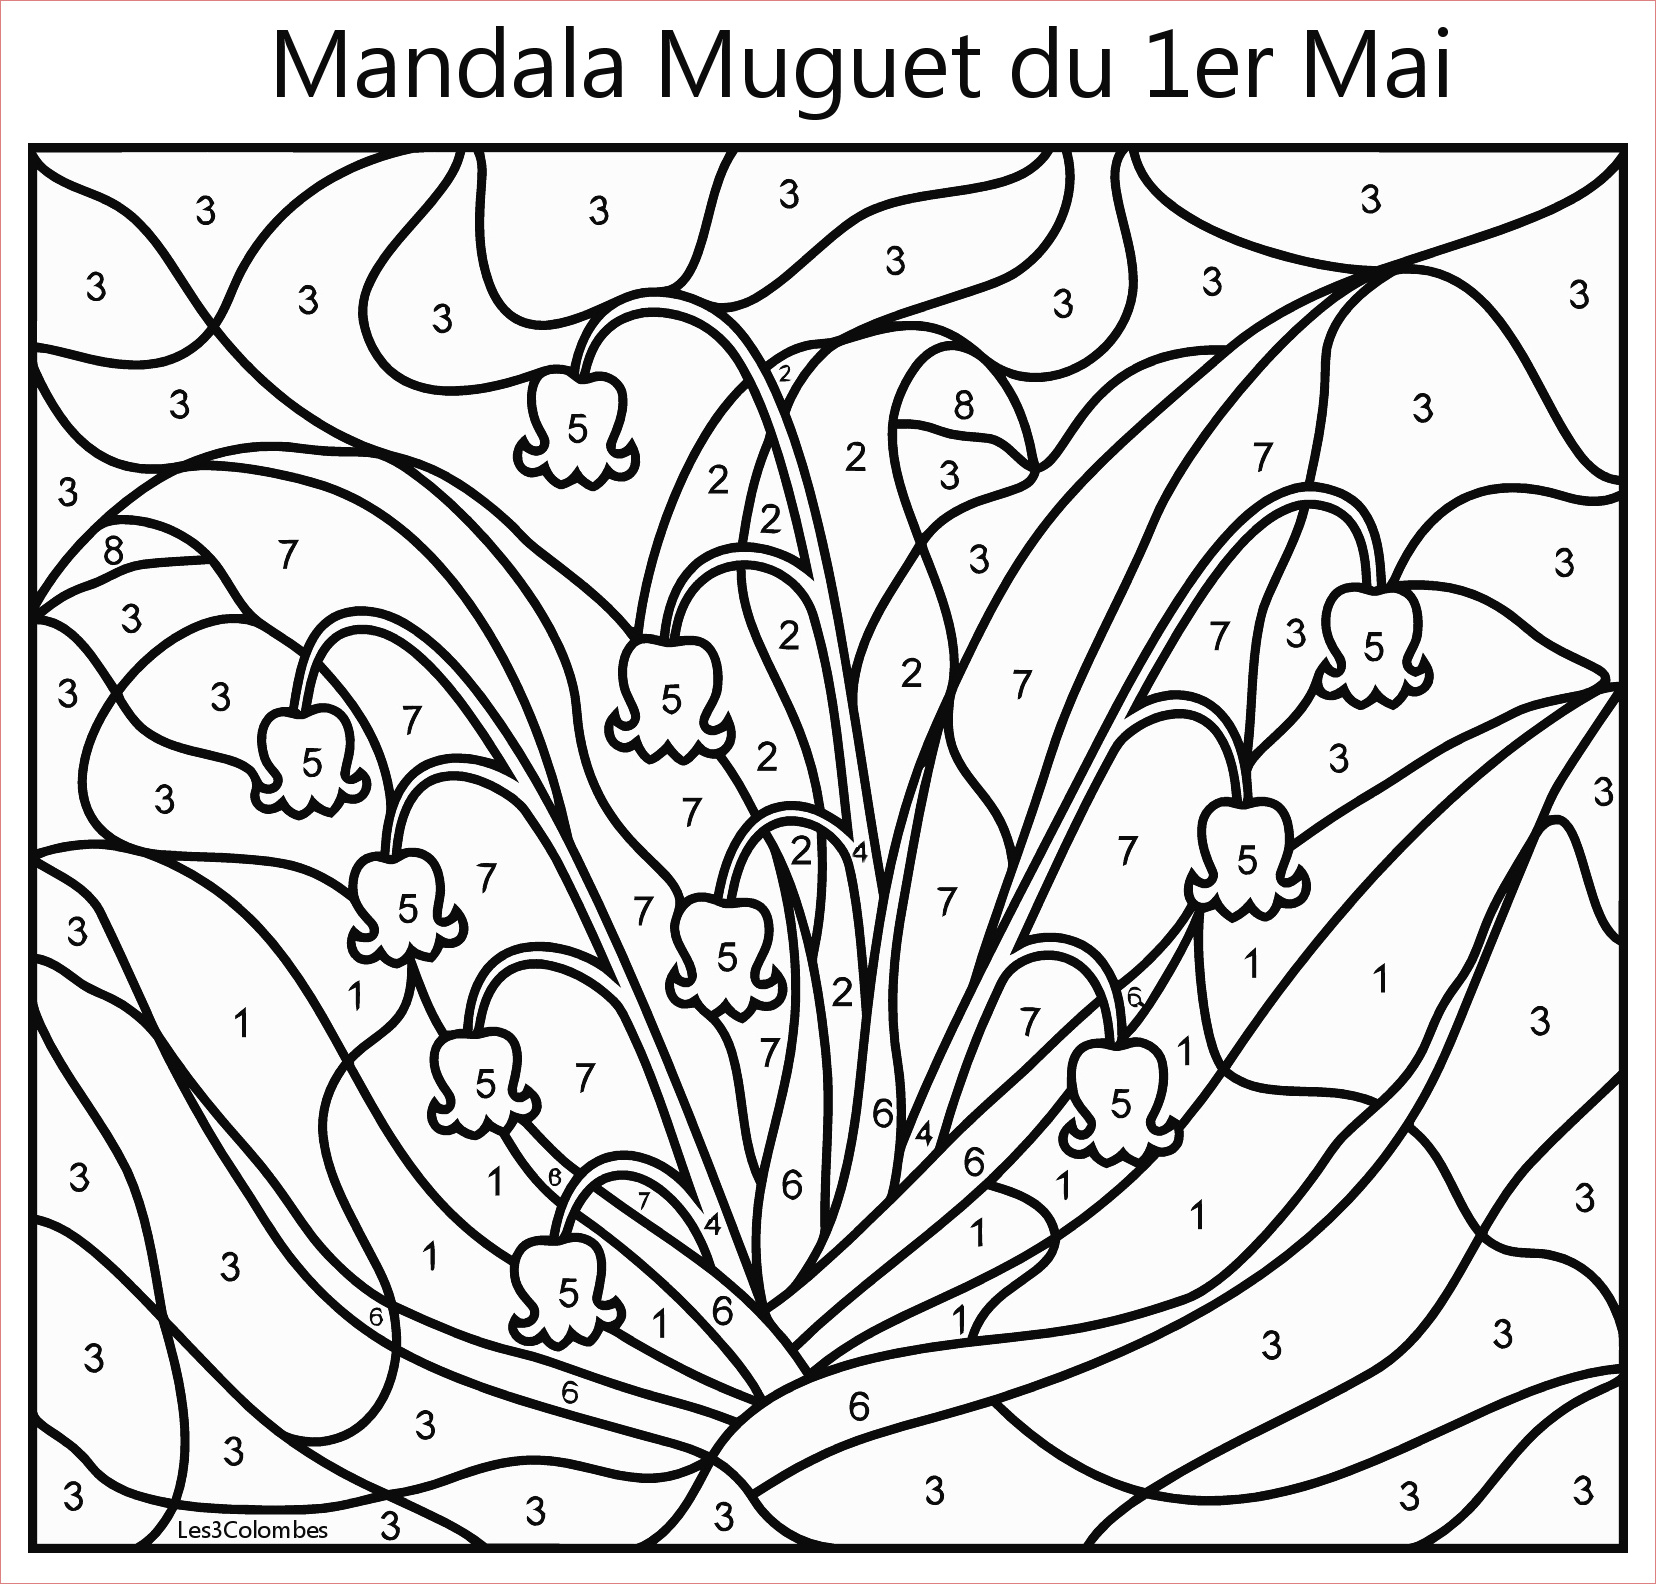 4691 mandala muguet 1er mai enfant